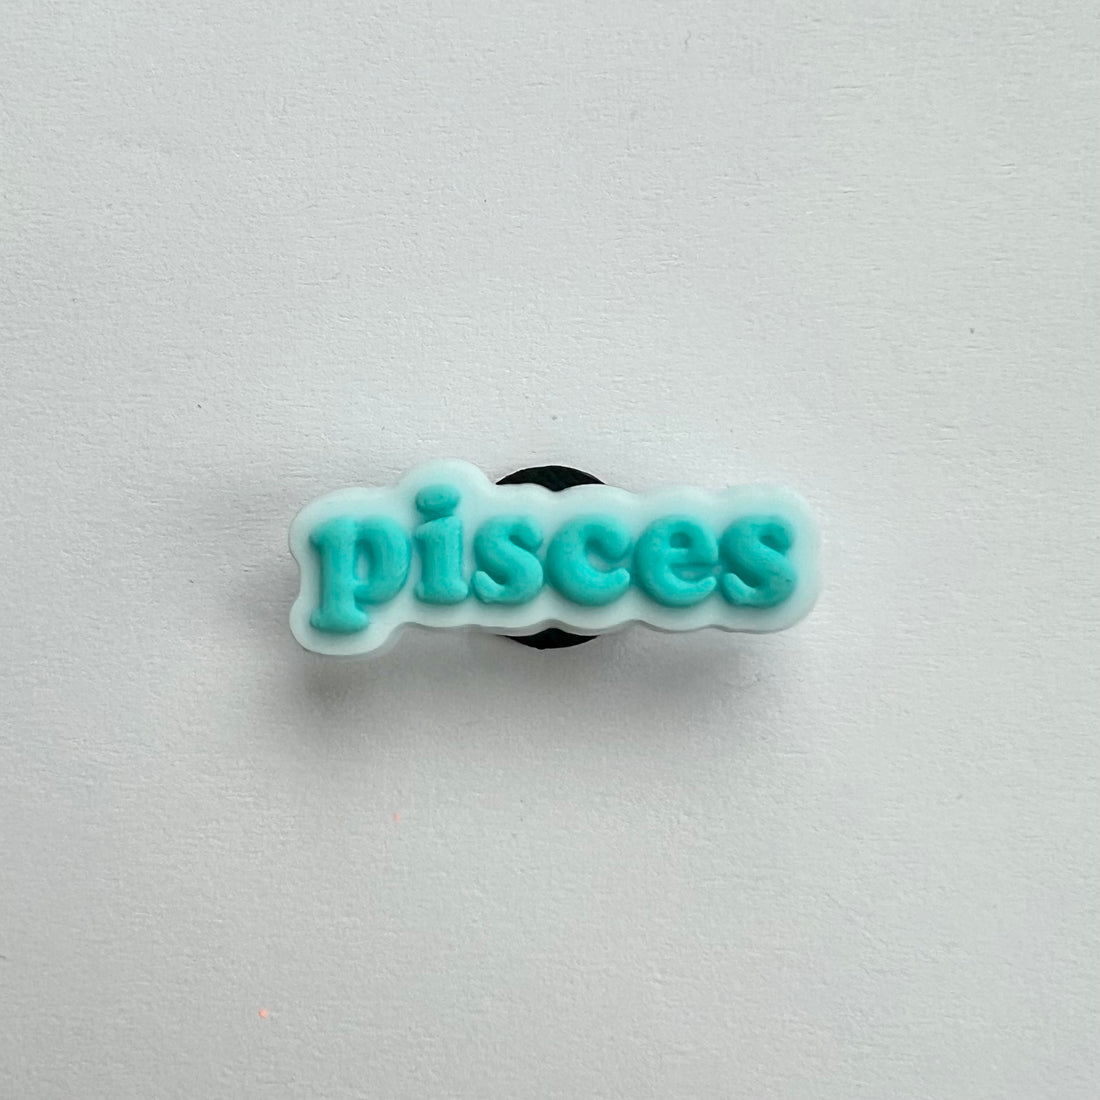 Pisces Charm